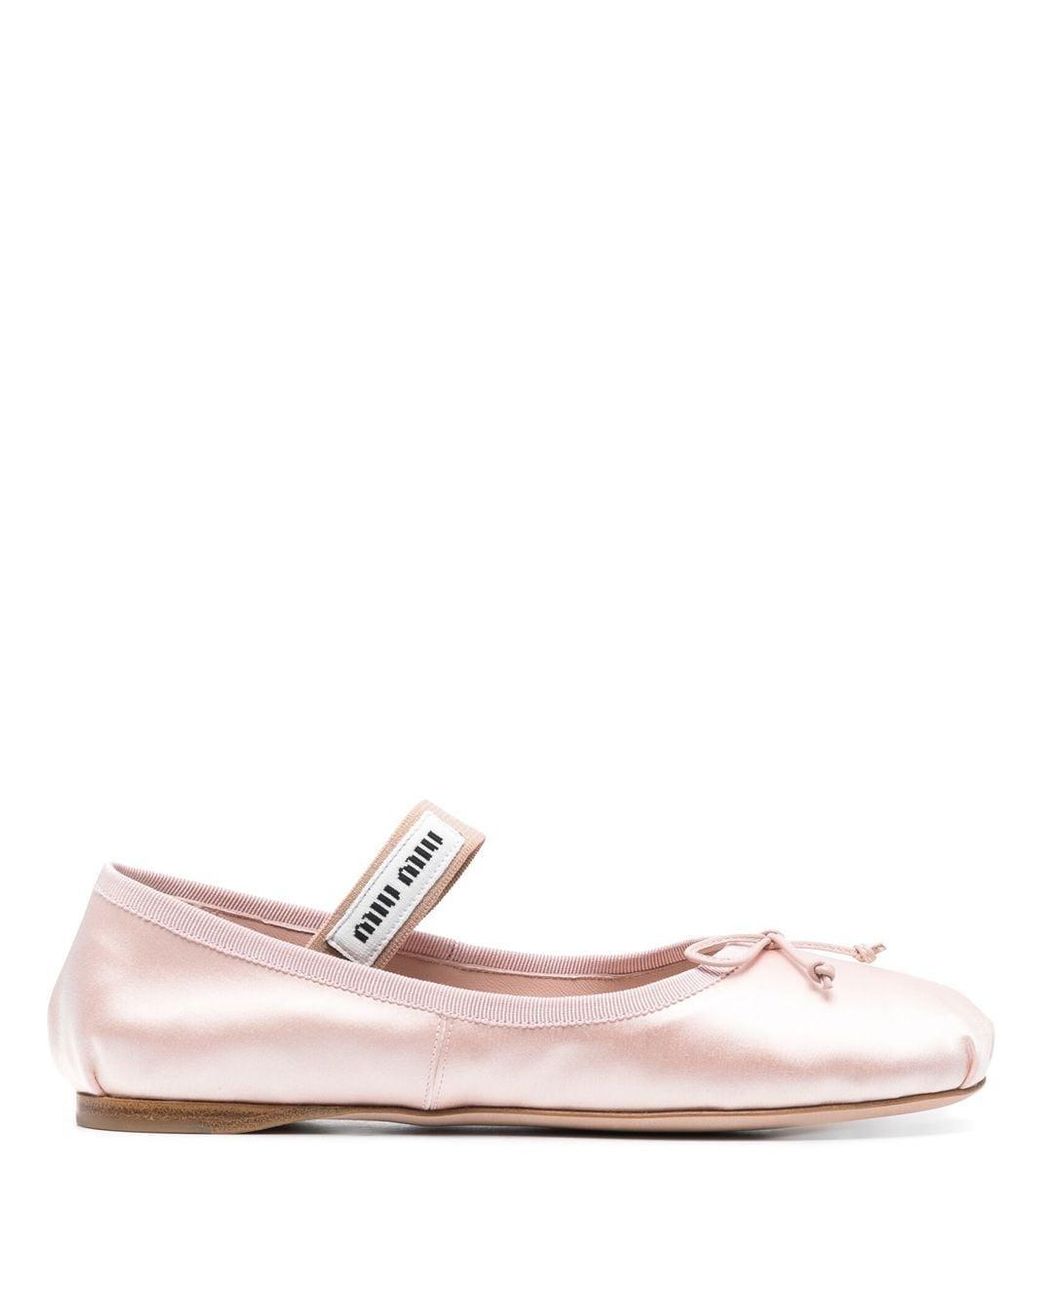 Miu Miu Leather Logo Strap Ballet Flats in Pink | Lyst UK